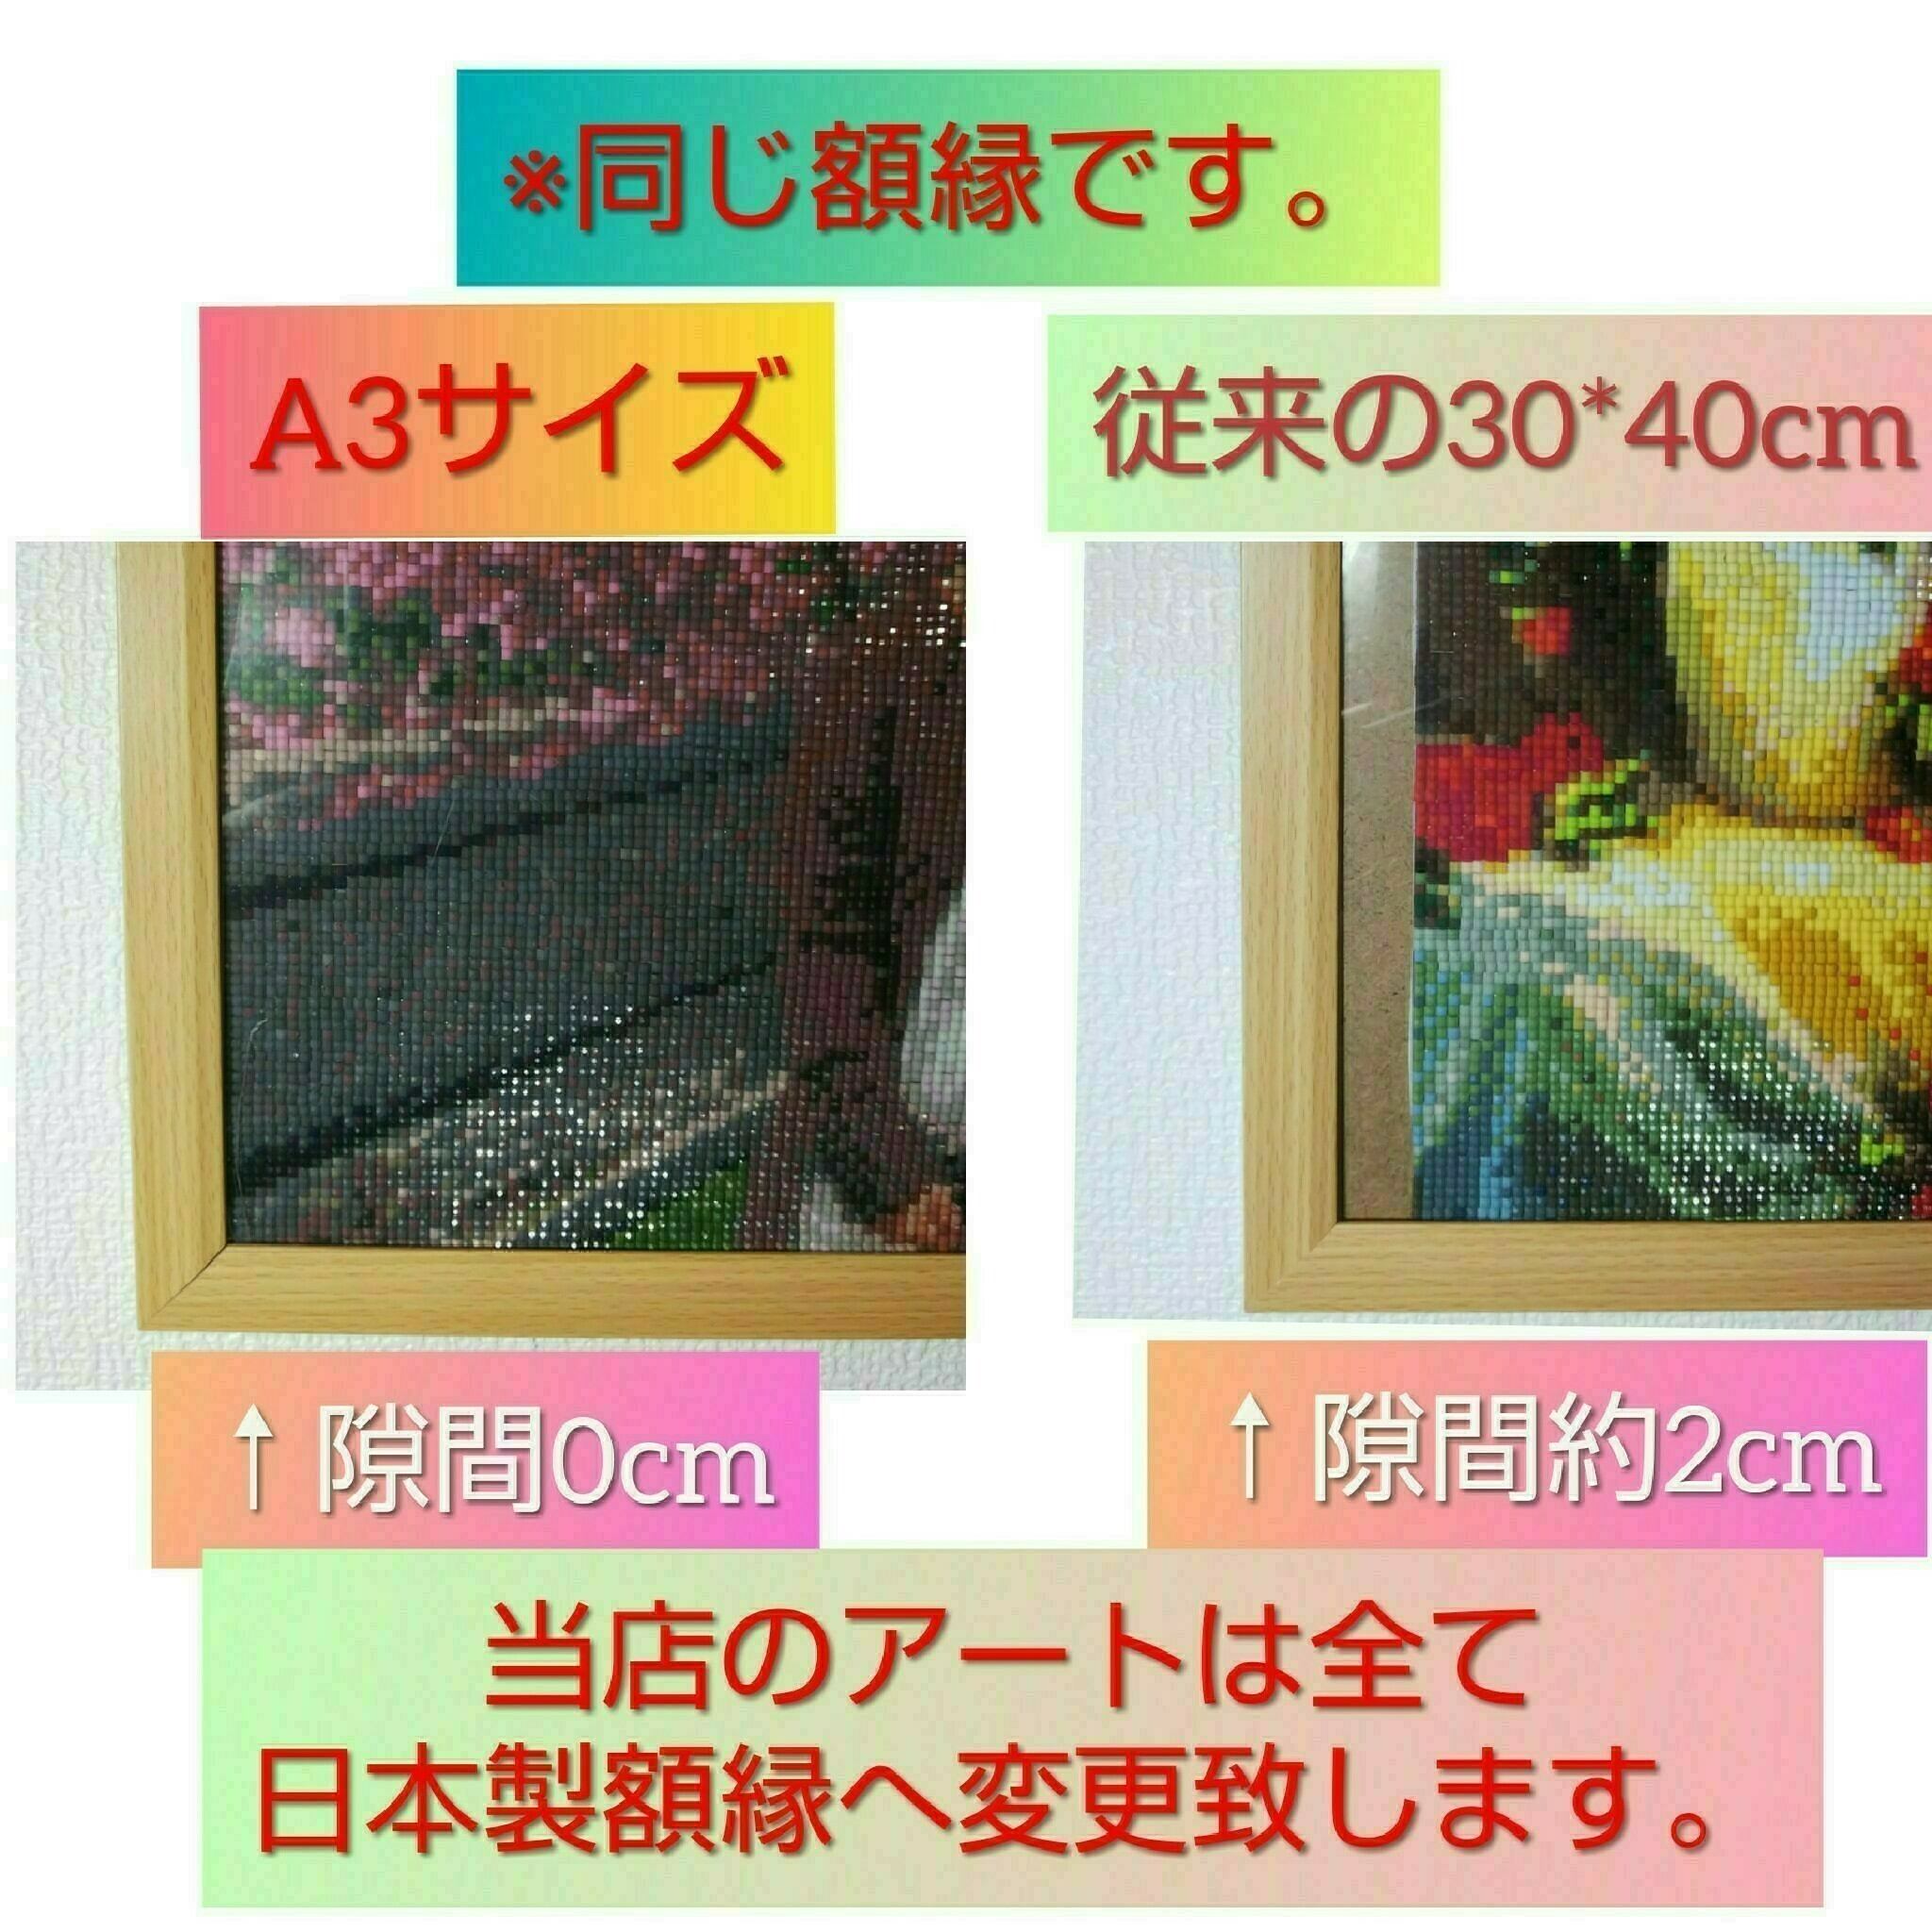 A3サイズ 四角ビーズ【fan-005】フルダイヤモンドアート